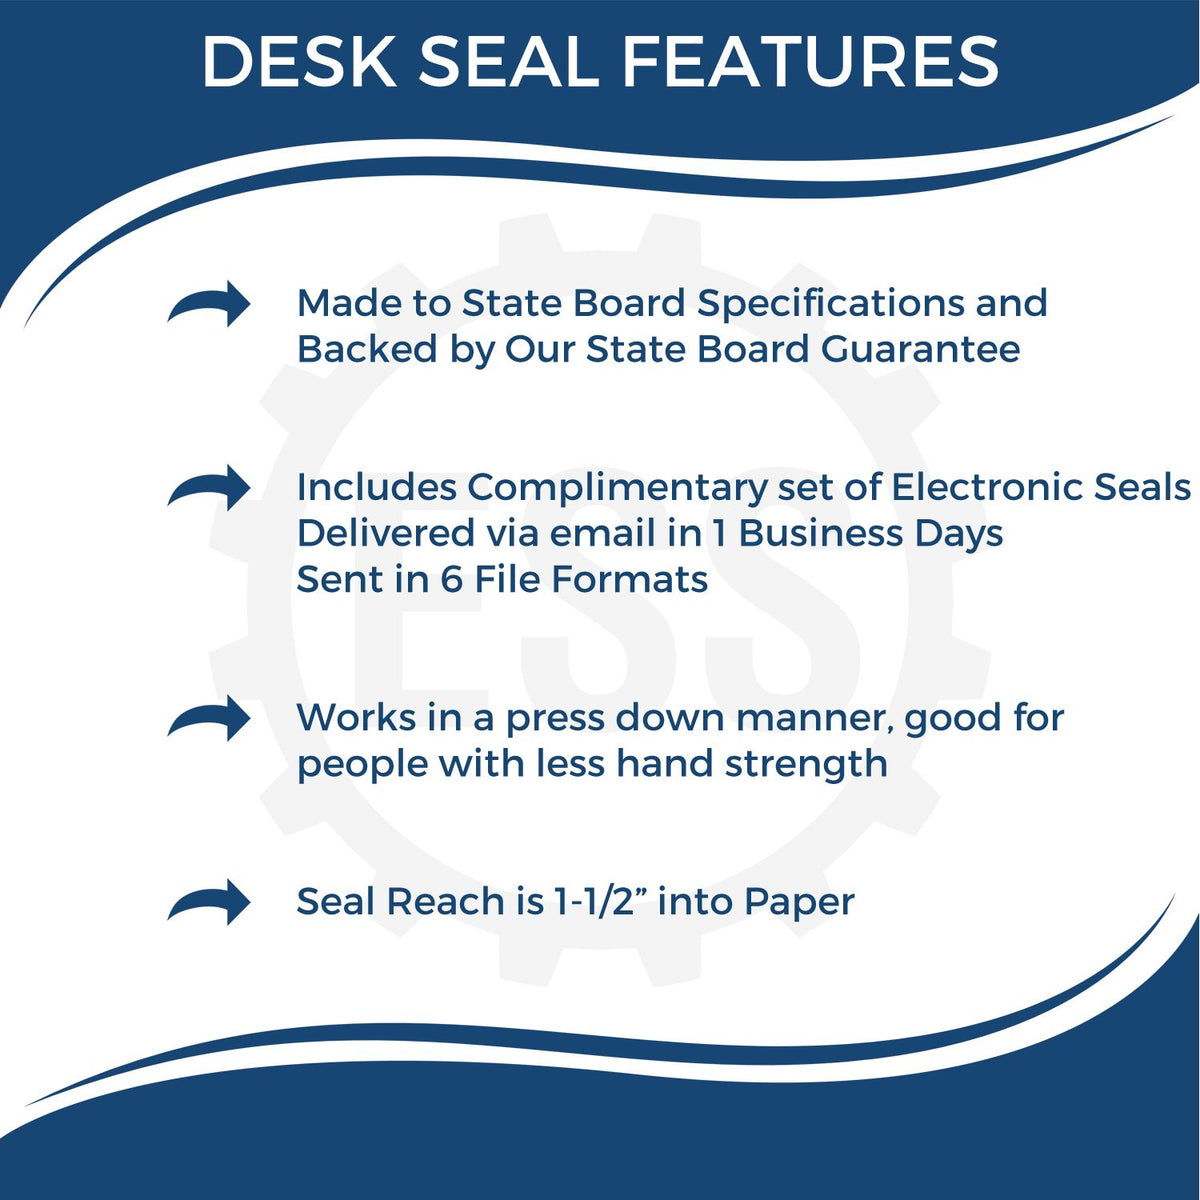 Florida Engineer Desk Seal